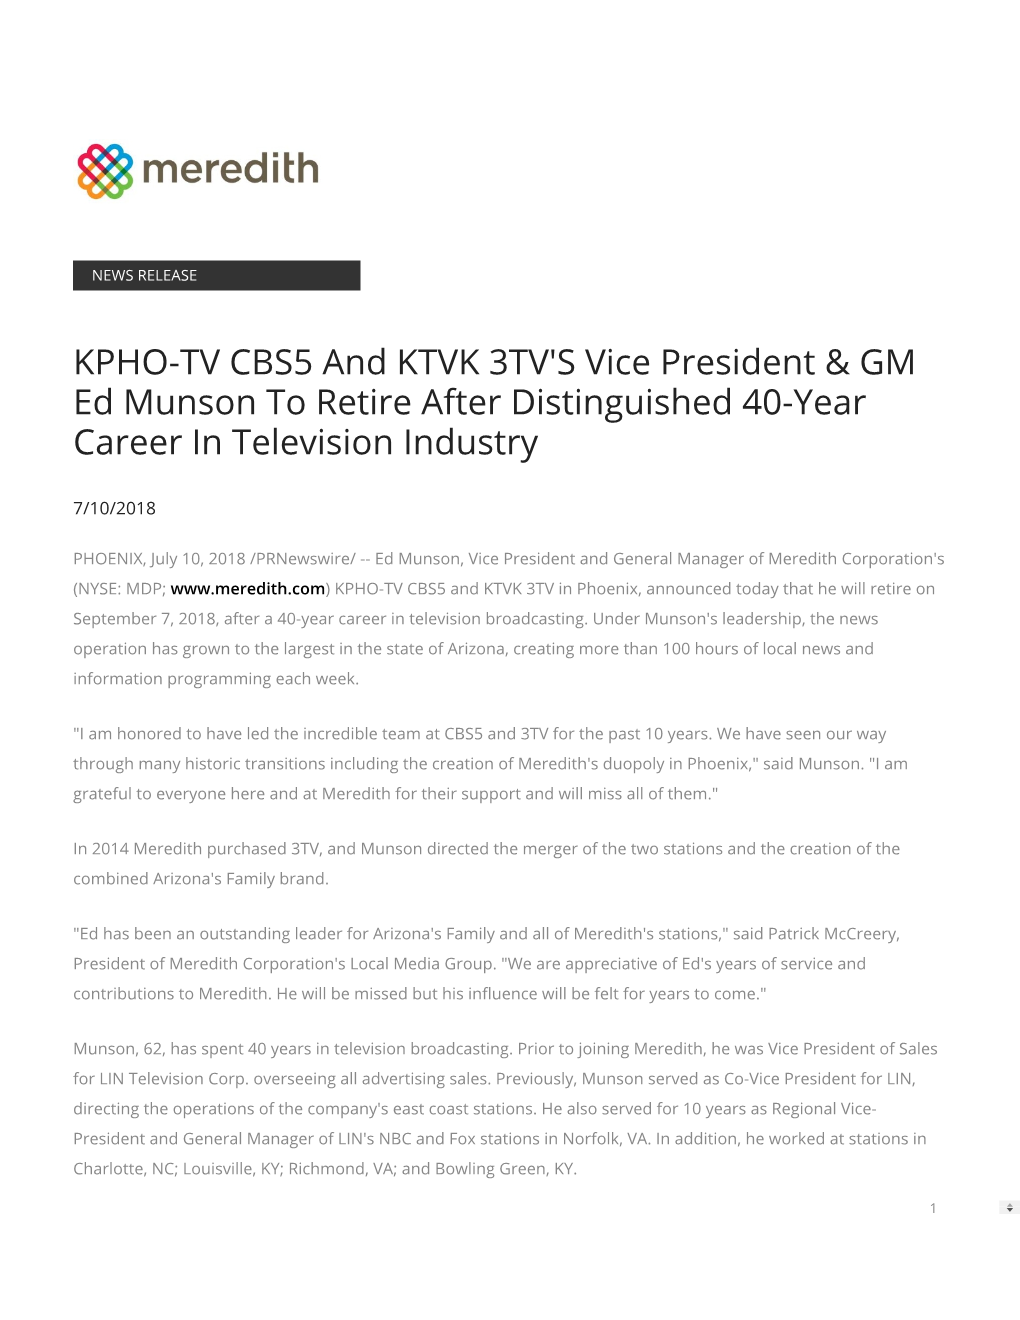 KPHO-TV CBS5 and KTVK 3TV's Vice President & GM Ed Munson To